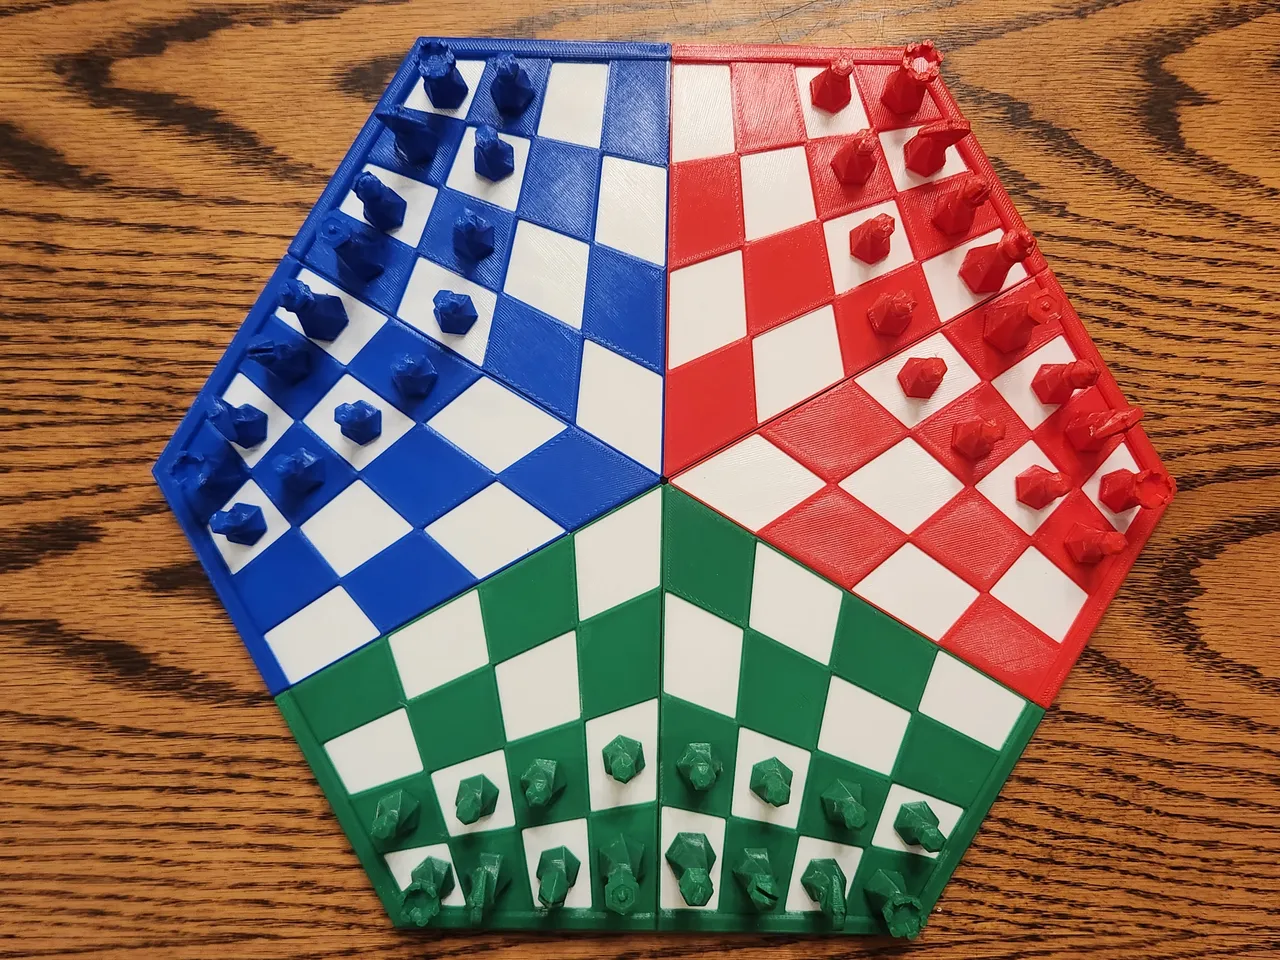 Three Player Chess Set  Hexagonal Chess for 3 Players